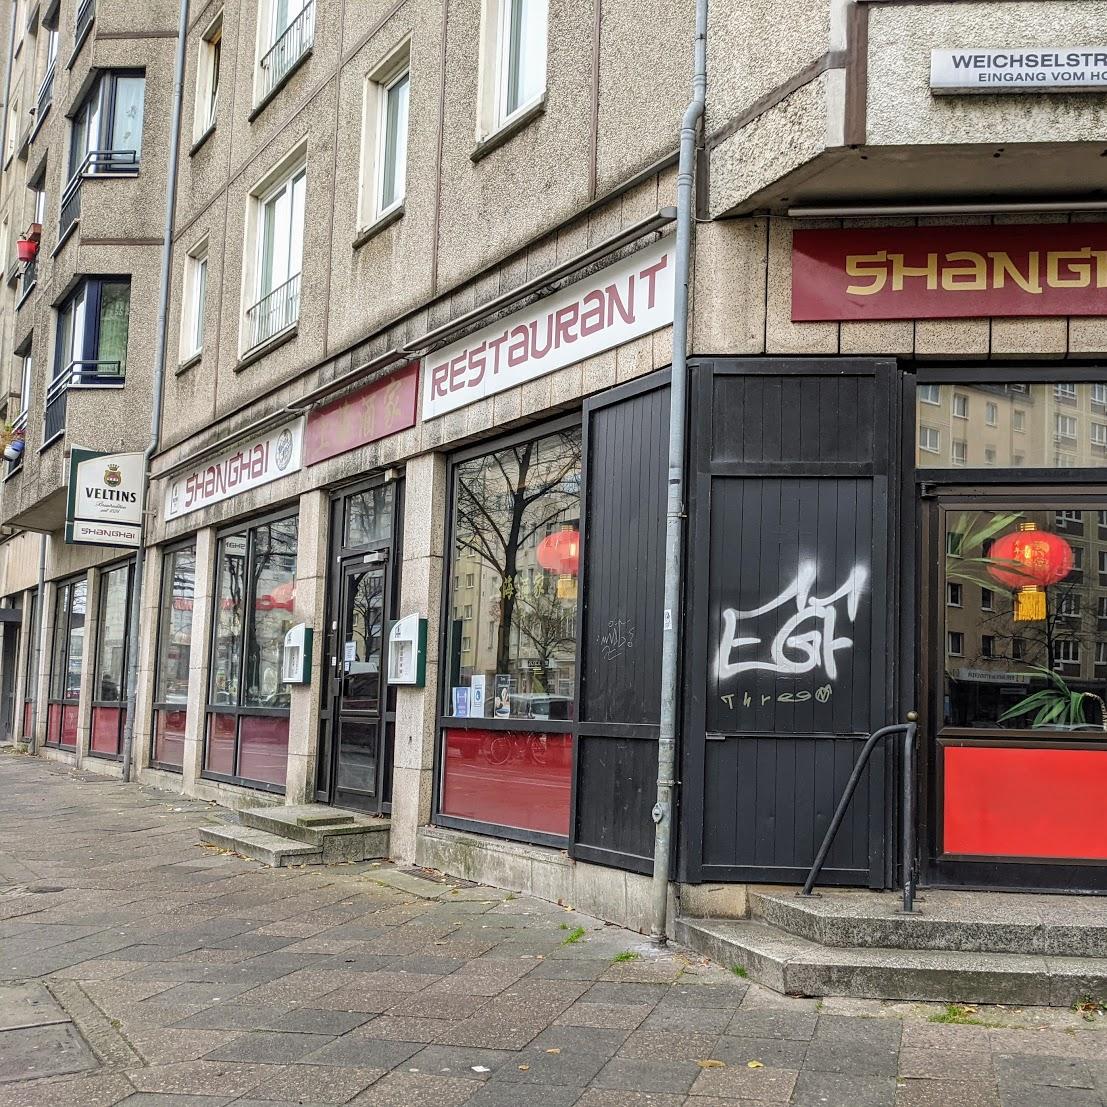 Restaurant "Chinarestaurant Shanghai" in Berlin